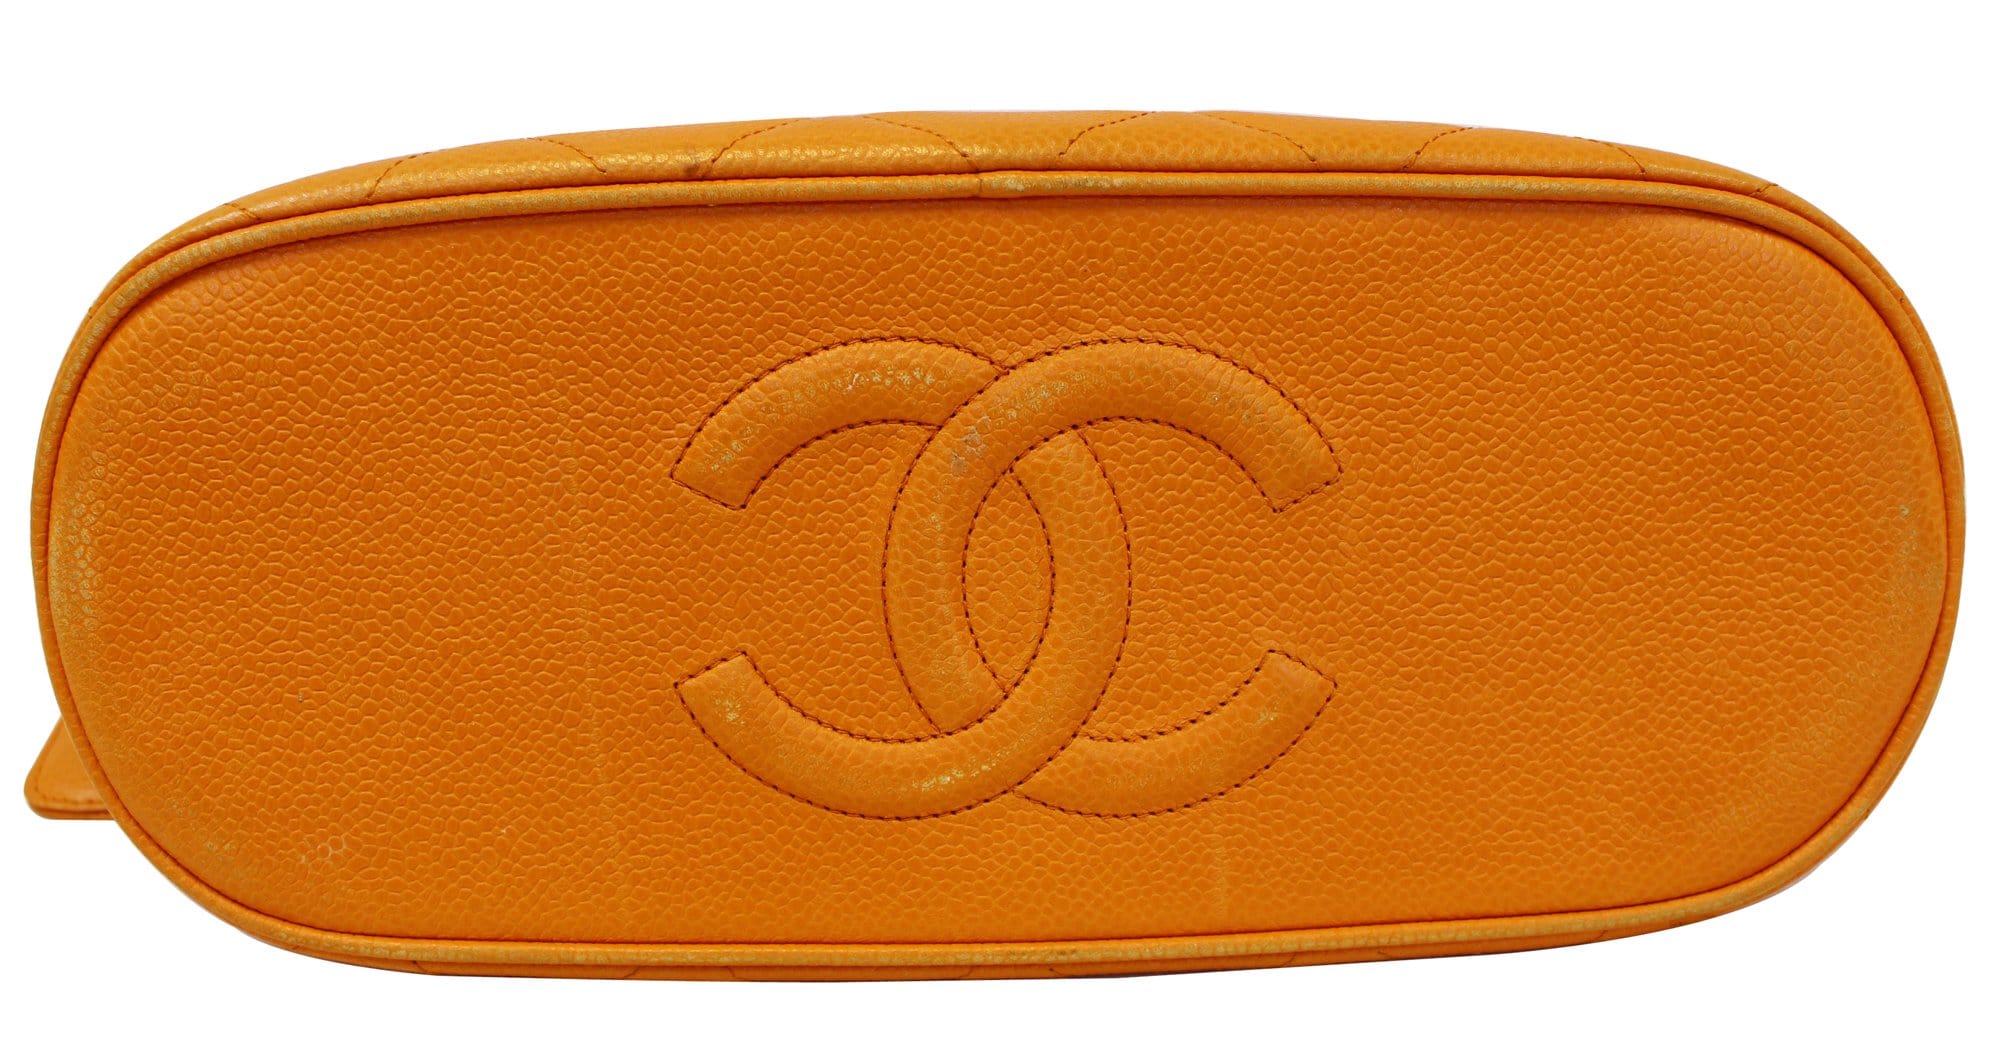 Vintage CHANEL orange yellow color caviar leather chain shoulder